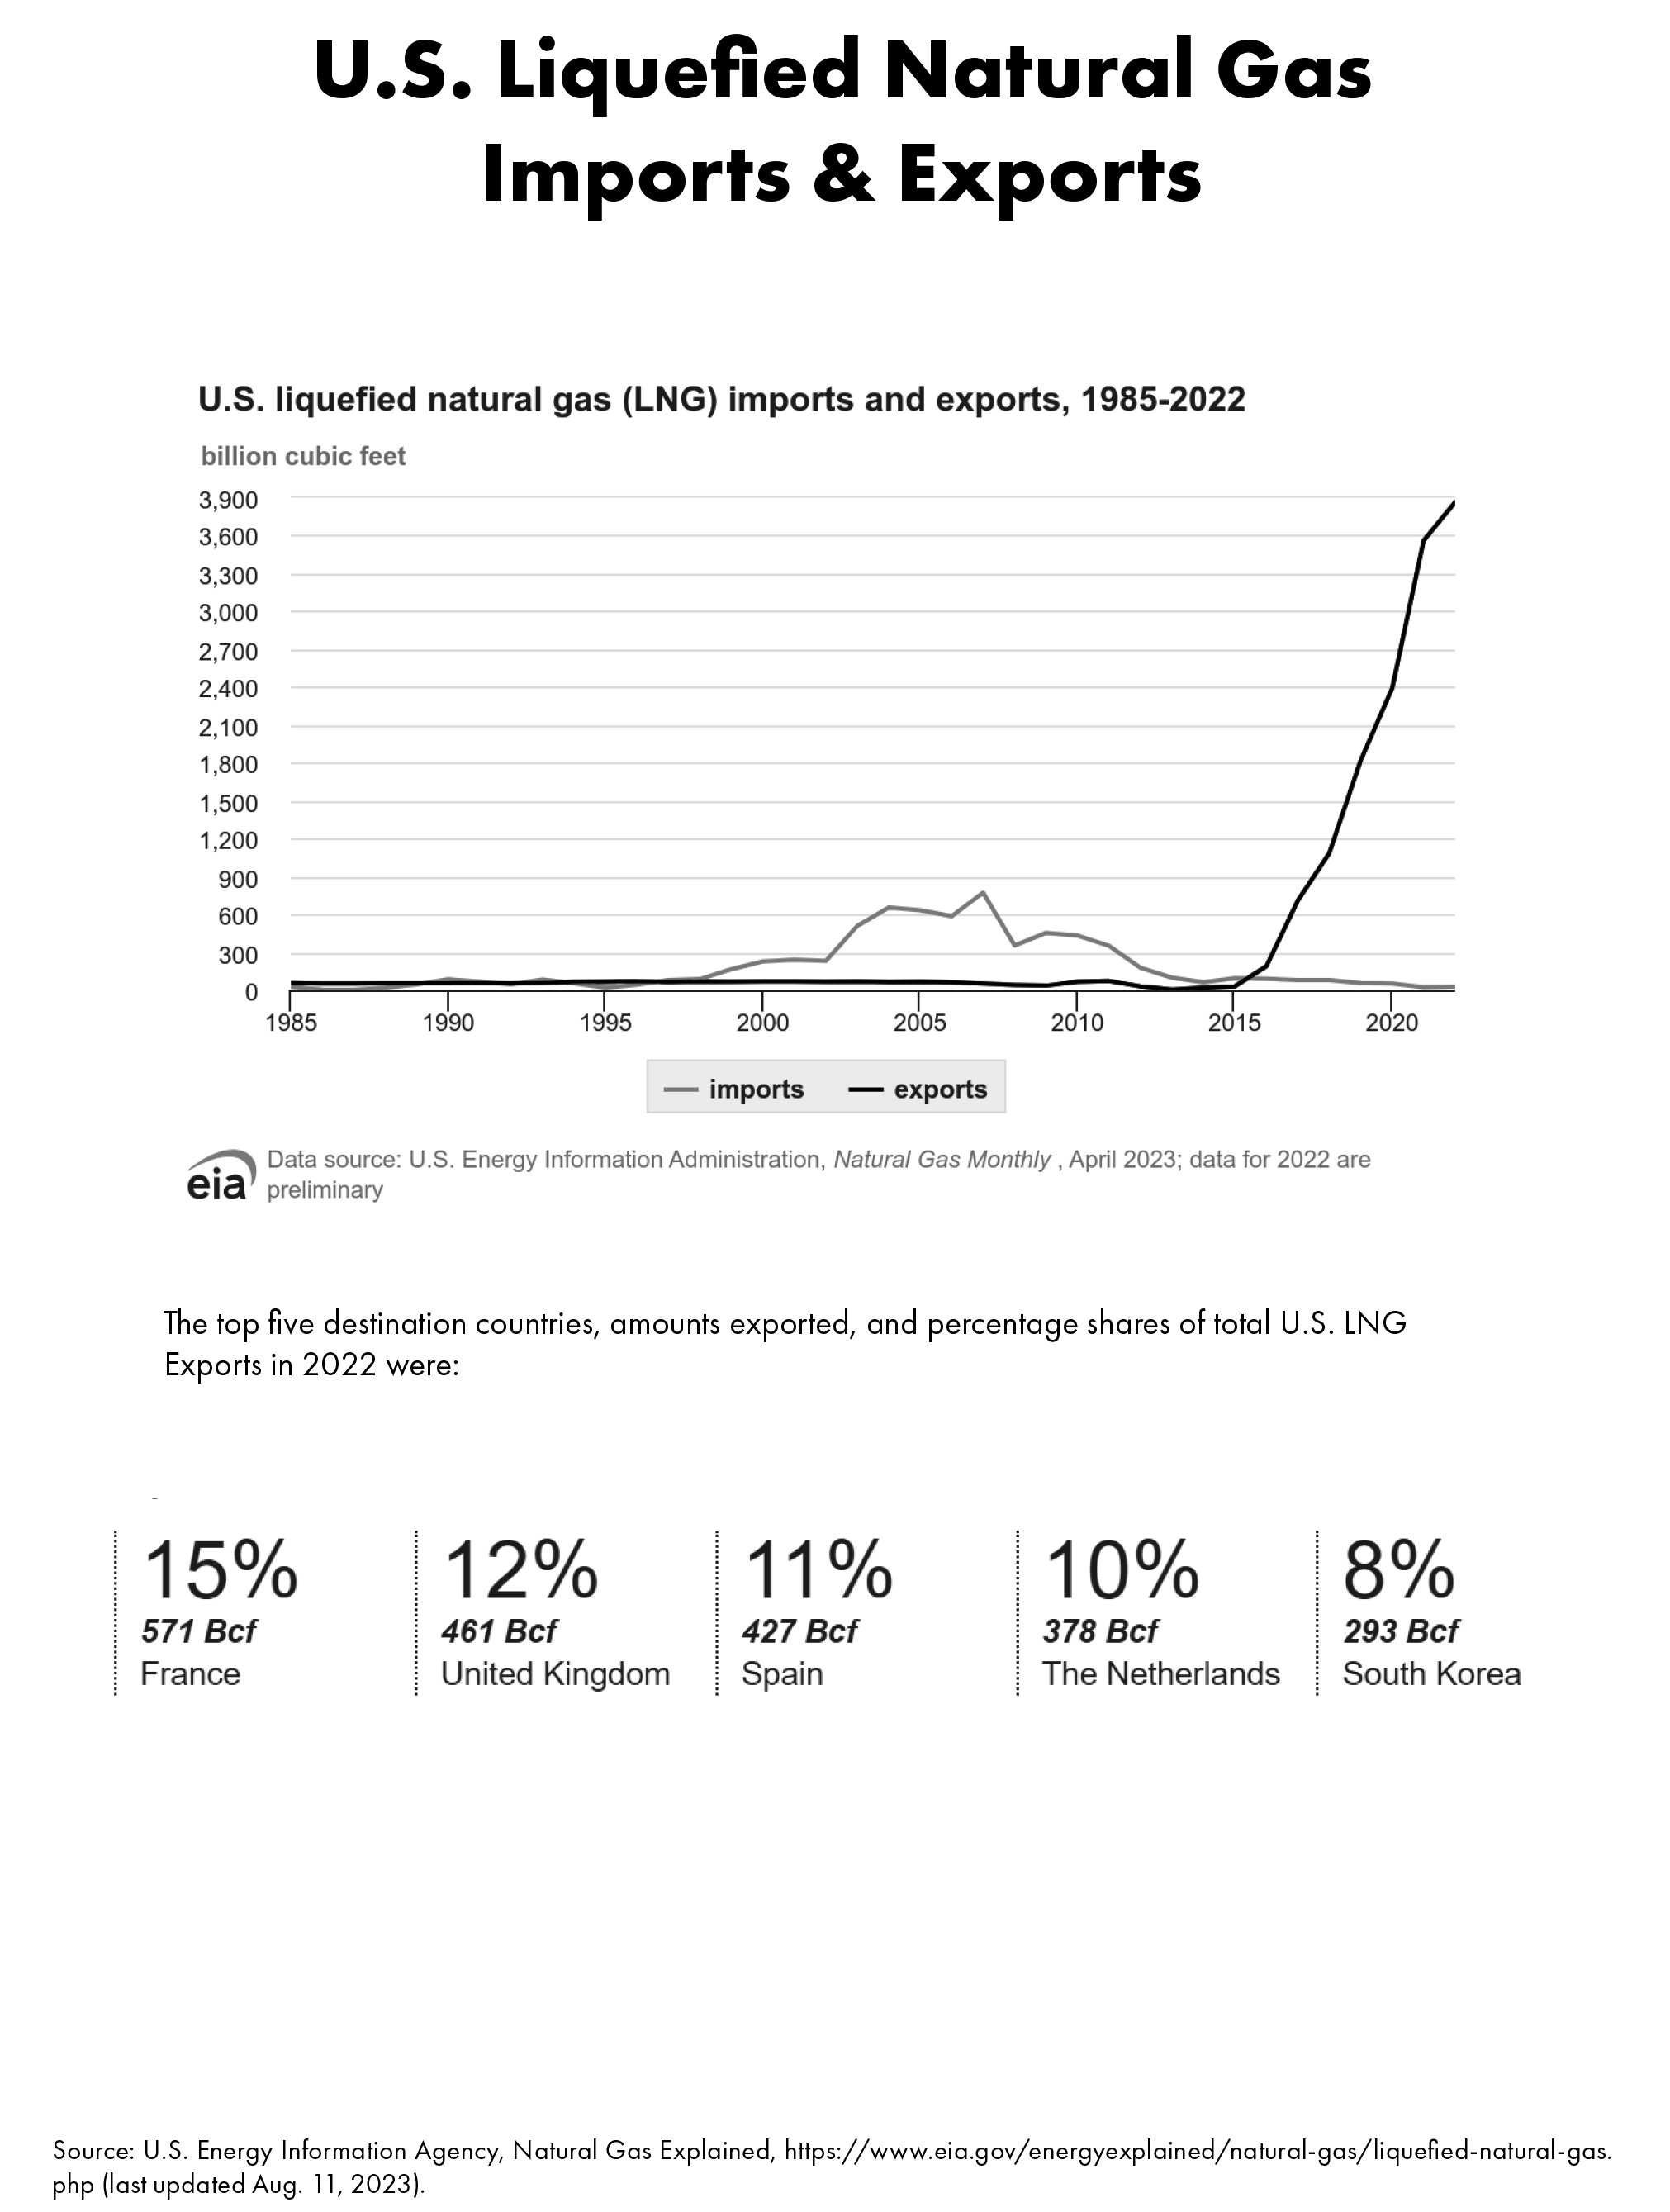 U.S. Liquefied Natural Gas Imports & Exports (chart)